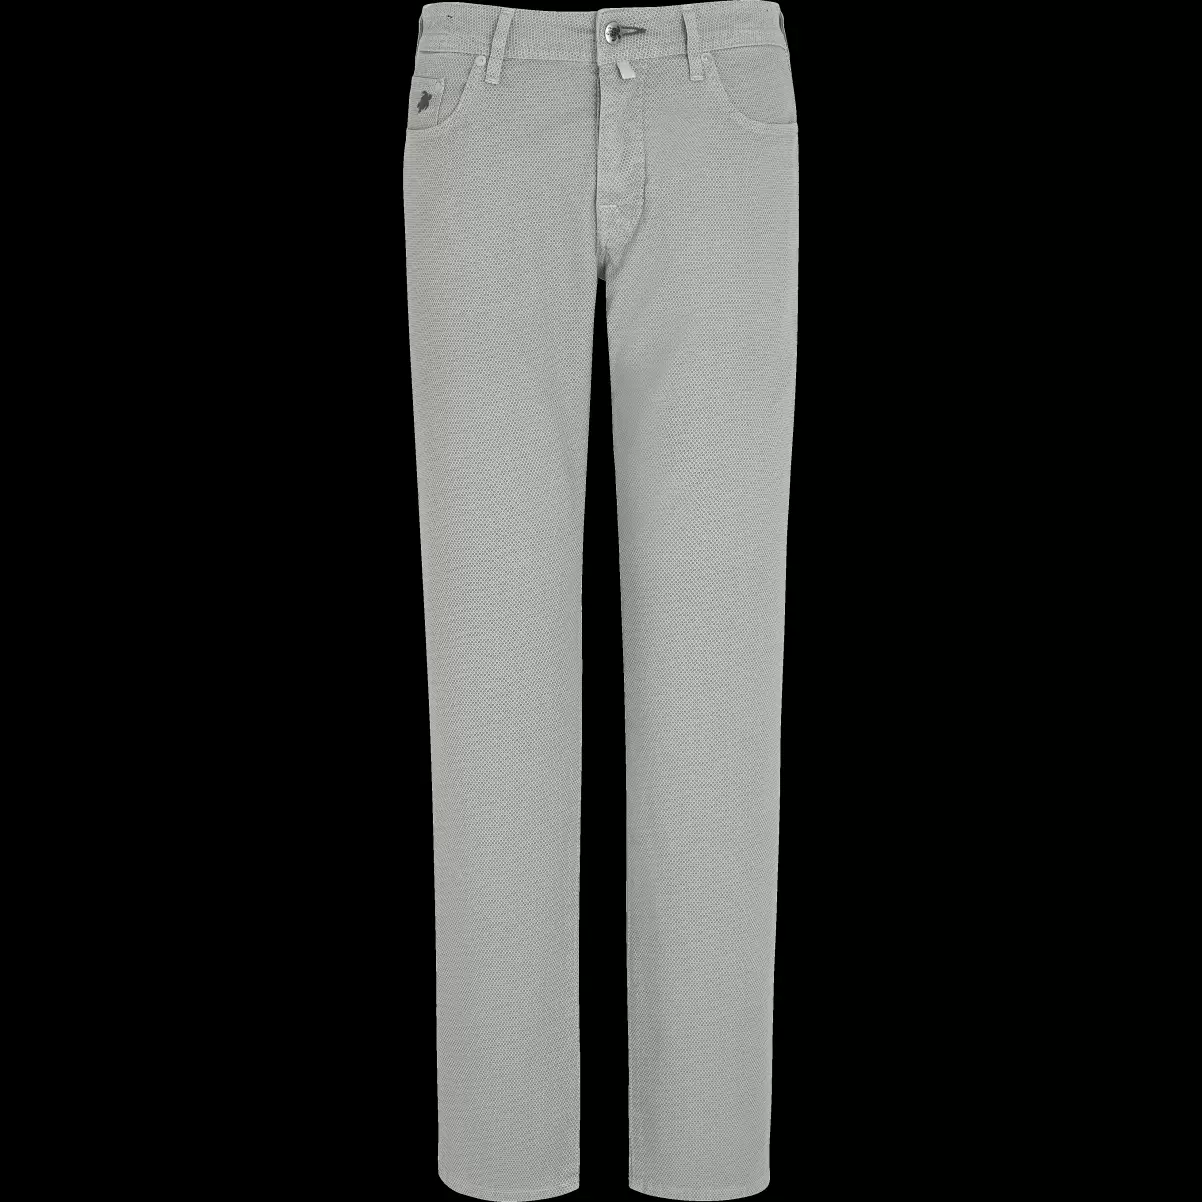 Personalización Caviar / Gris Vilebrequin Pantalones Hombre Pantalón De 5 Bolsillos Con Estampado Micro Dot Para Hombre - 3